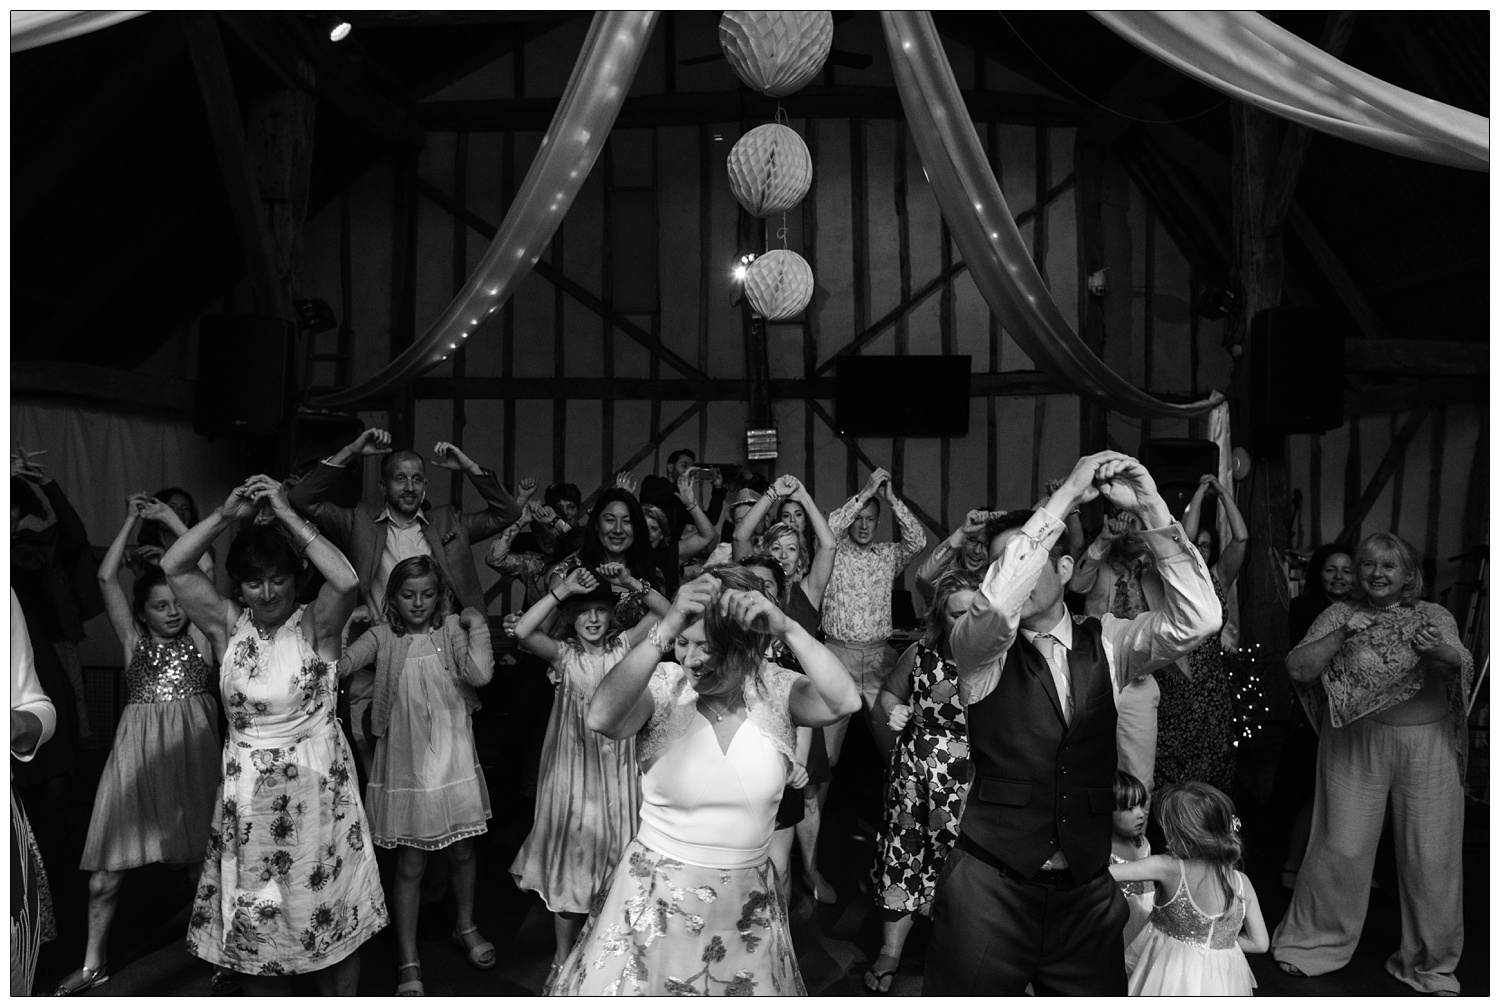 A flash mob dance at a wedding reception.